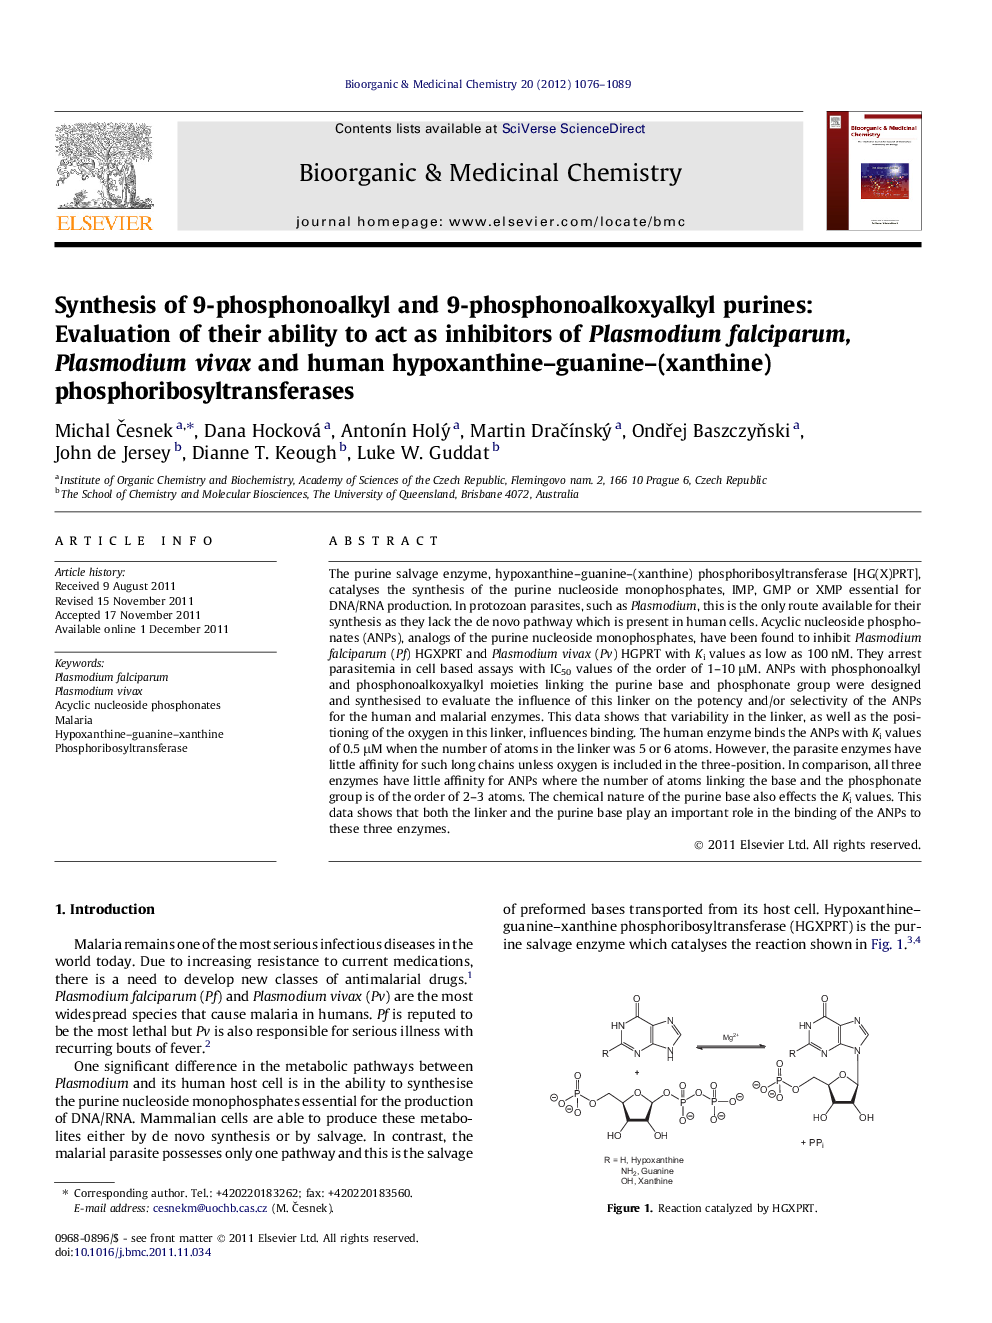 Synthesis of 9-phosphonoalkyl and 9-phosphonoalkoxyalkyl purines: Evaluation of their ability to act as inhibitors of Plasmodium falciparum, Plasmodium vivax and human hypoxanthine-guanine-(xanthine) phosphoribosyltransferases